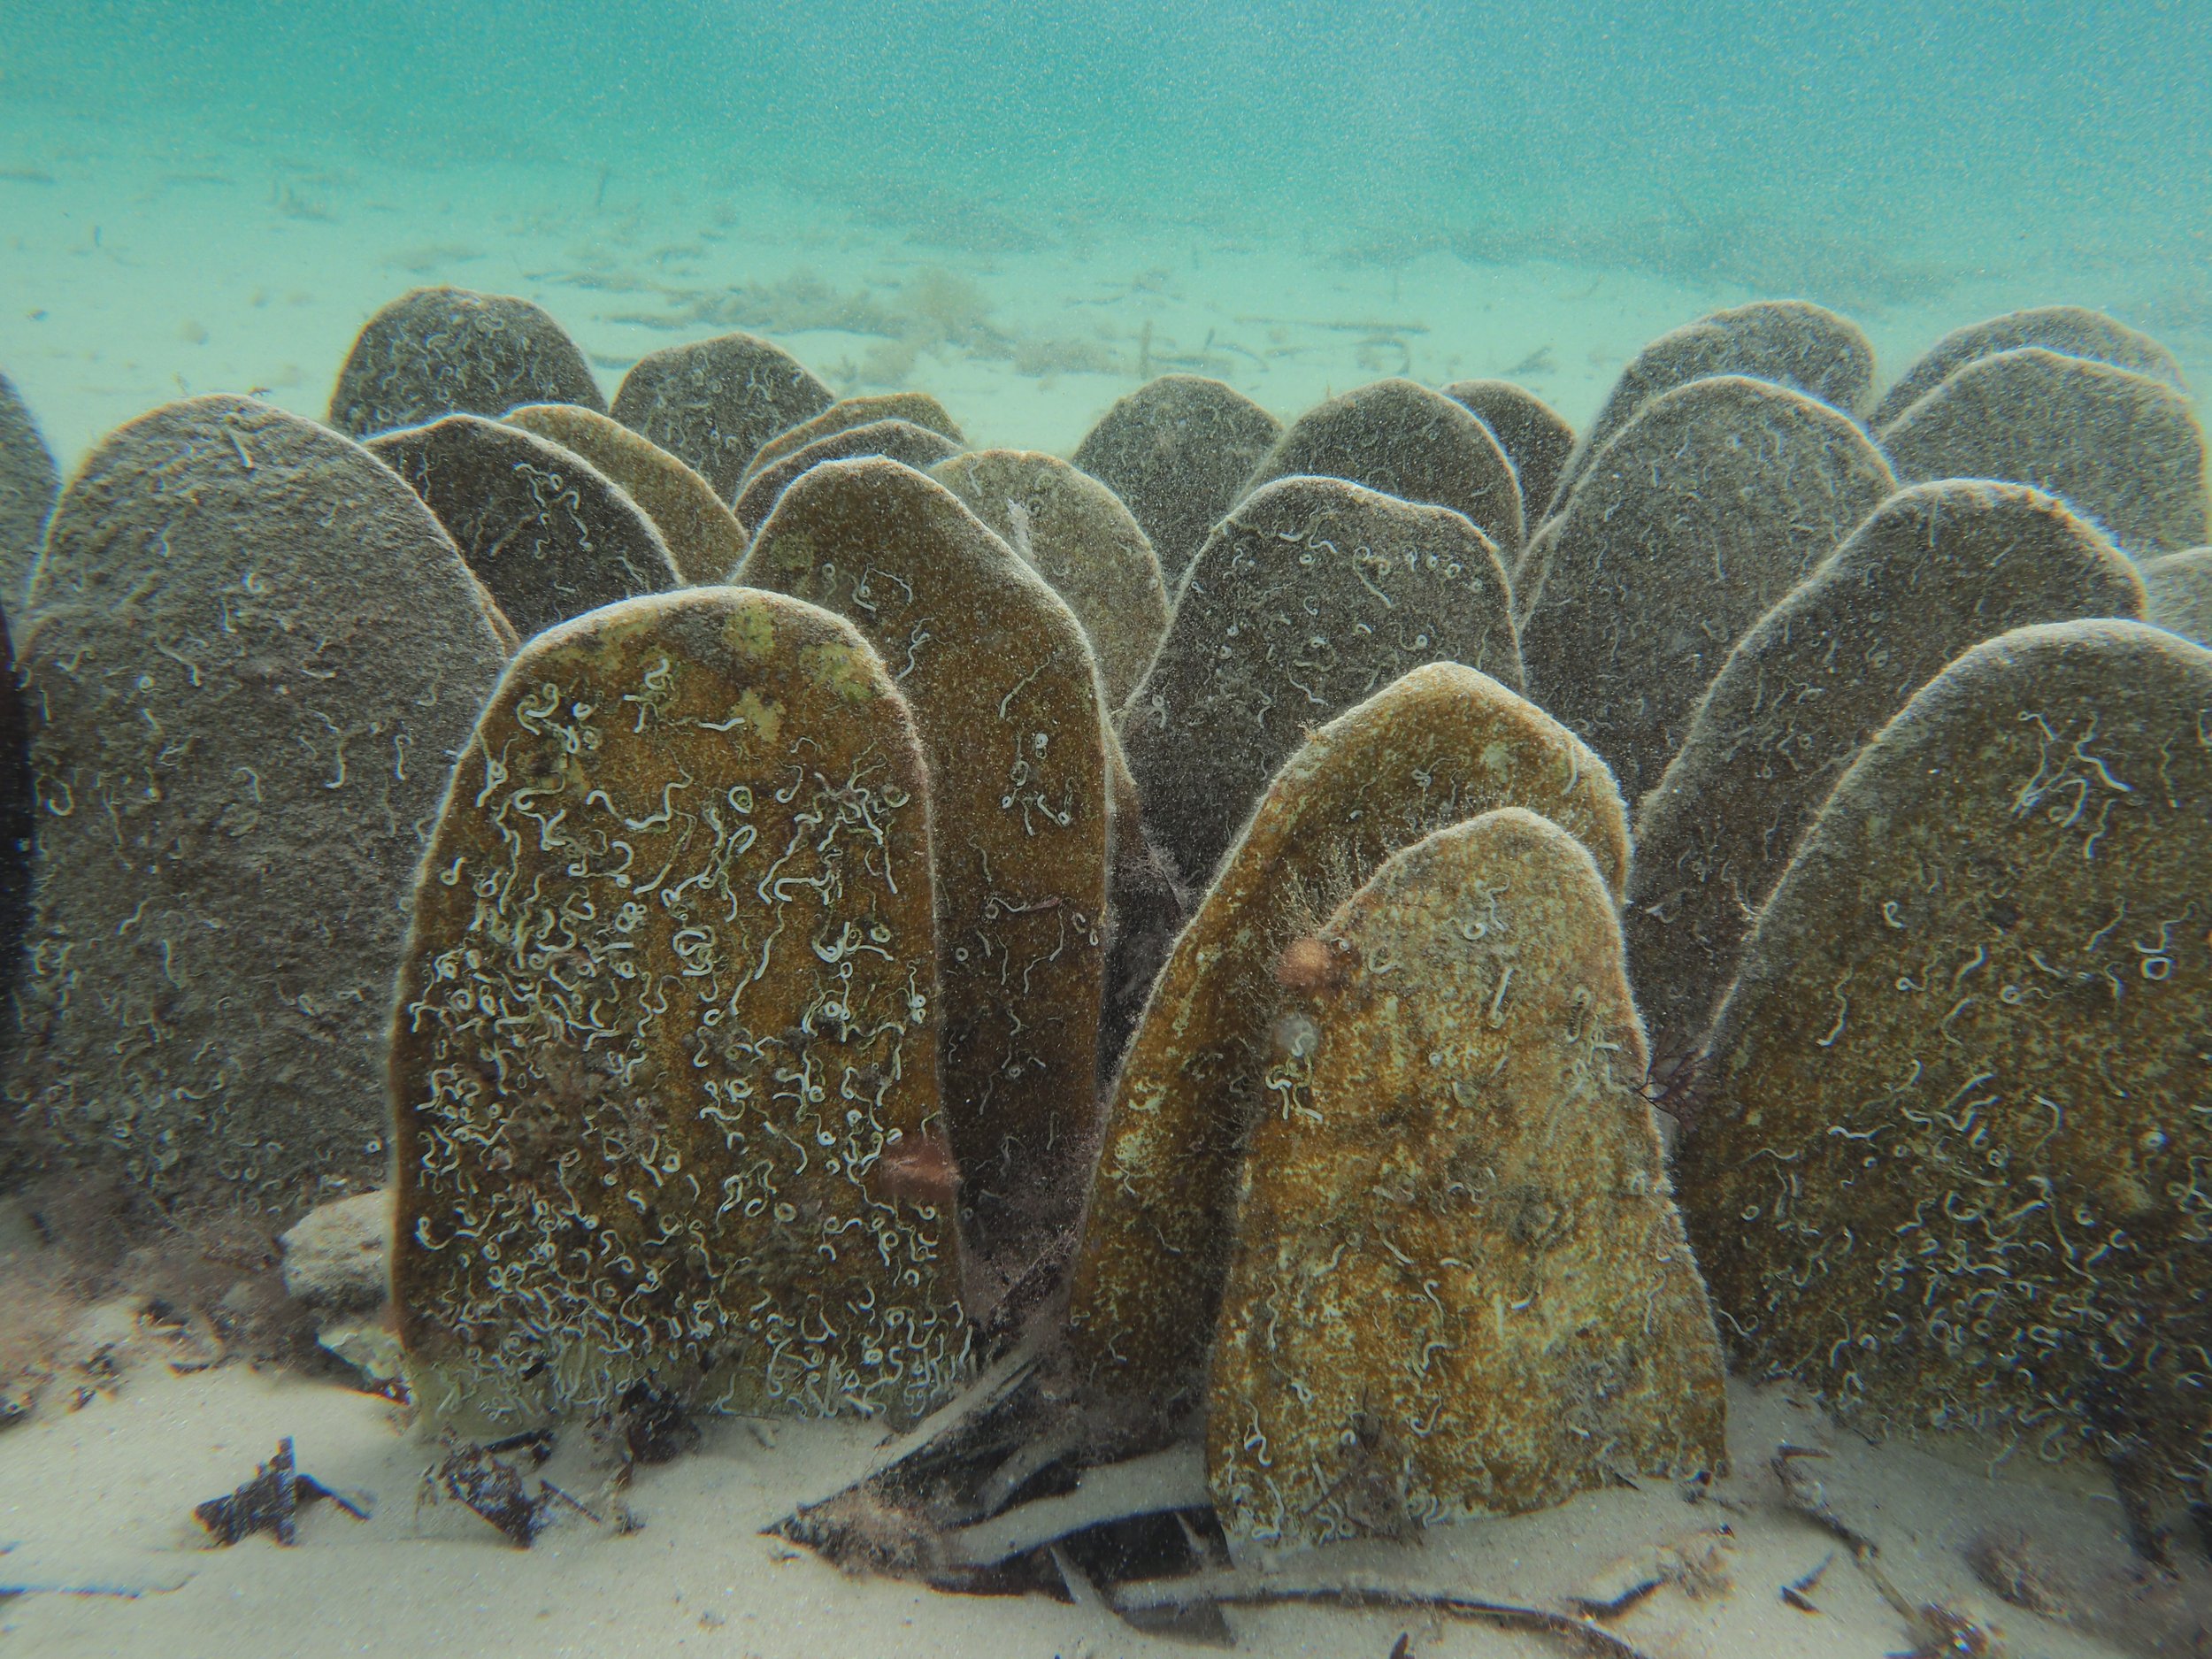 Ceramic Razor Fish Shell Forms In marine environment Kangaroo Island SA - Image Brodie Philp